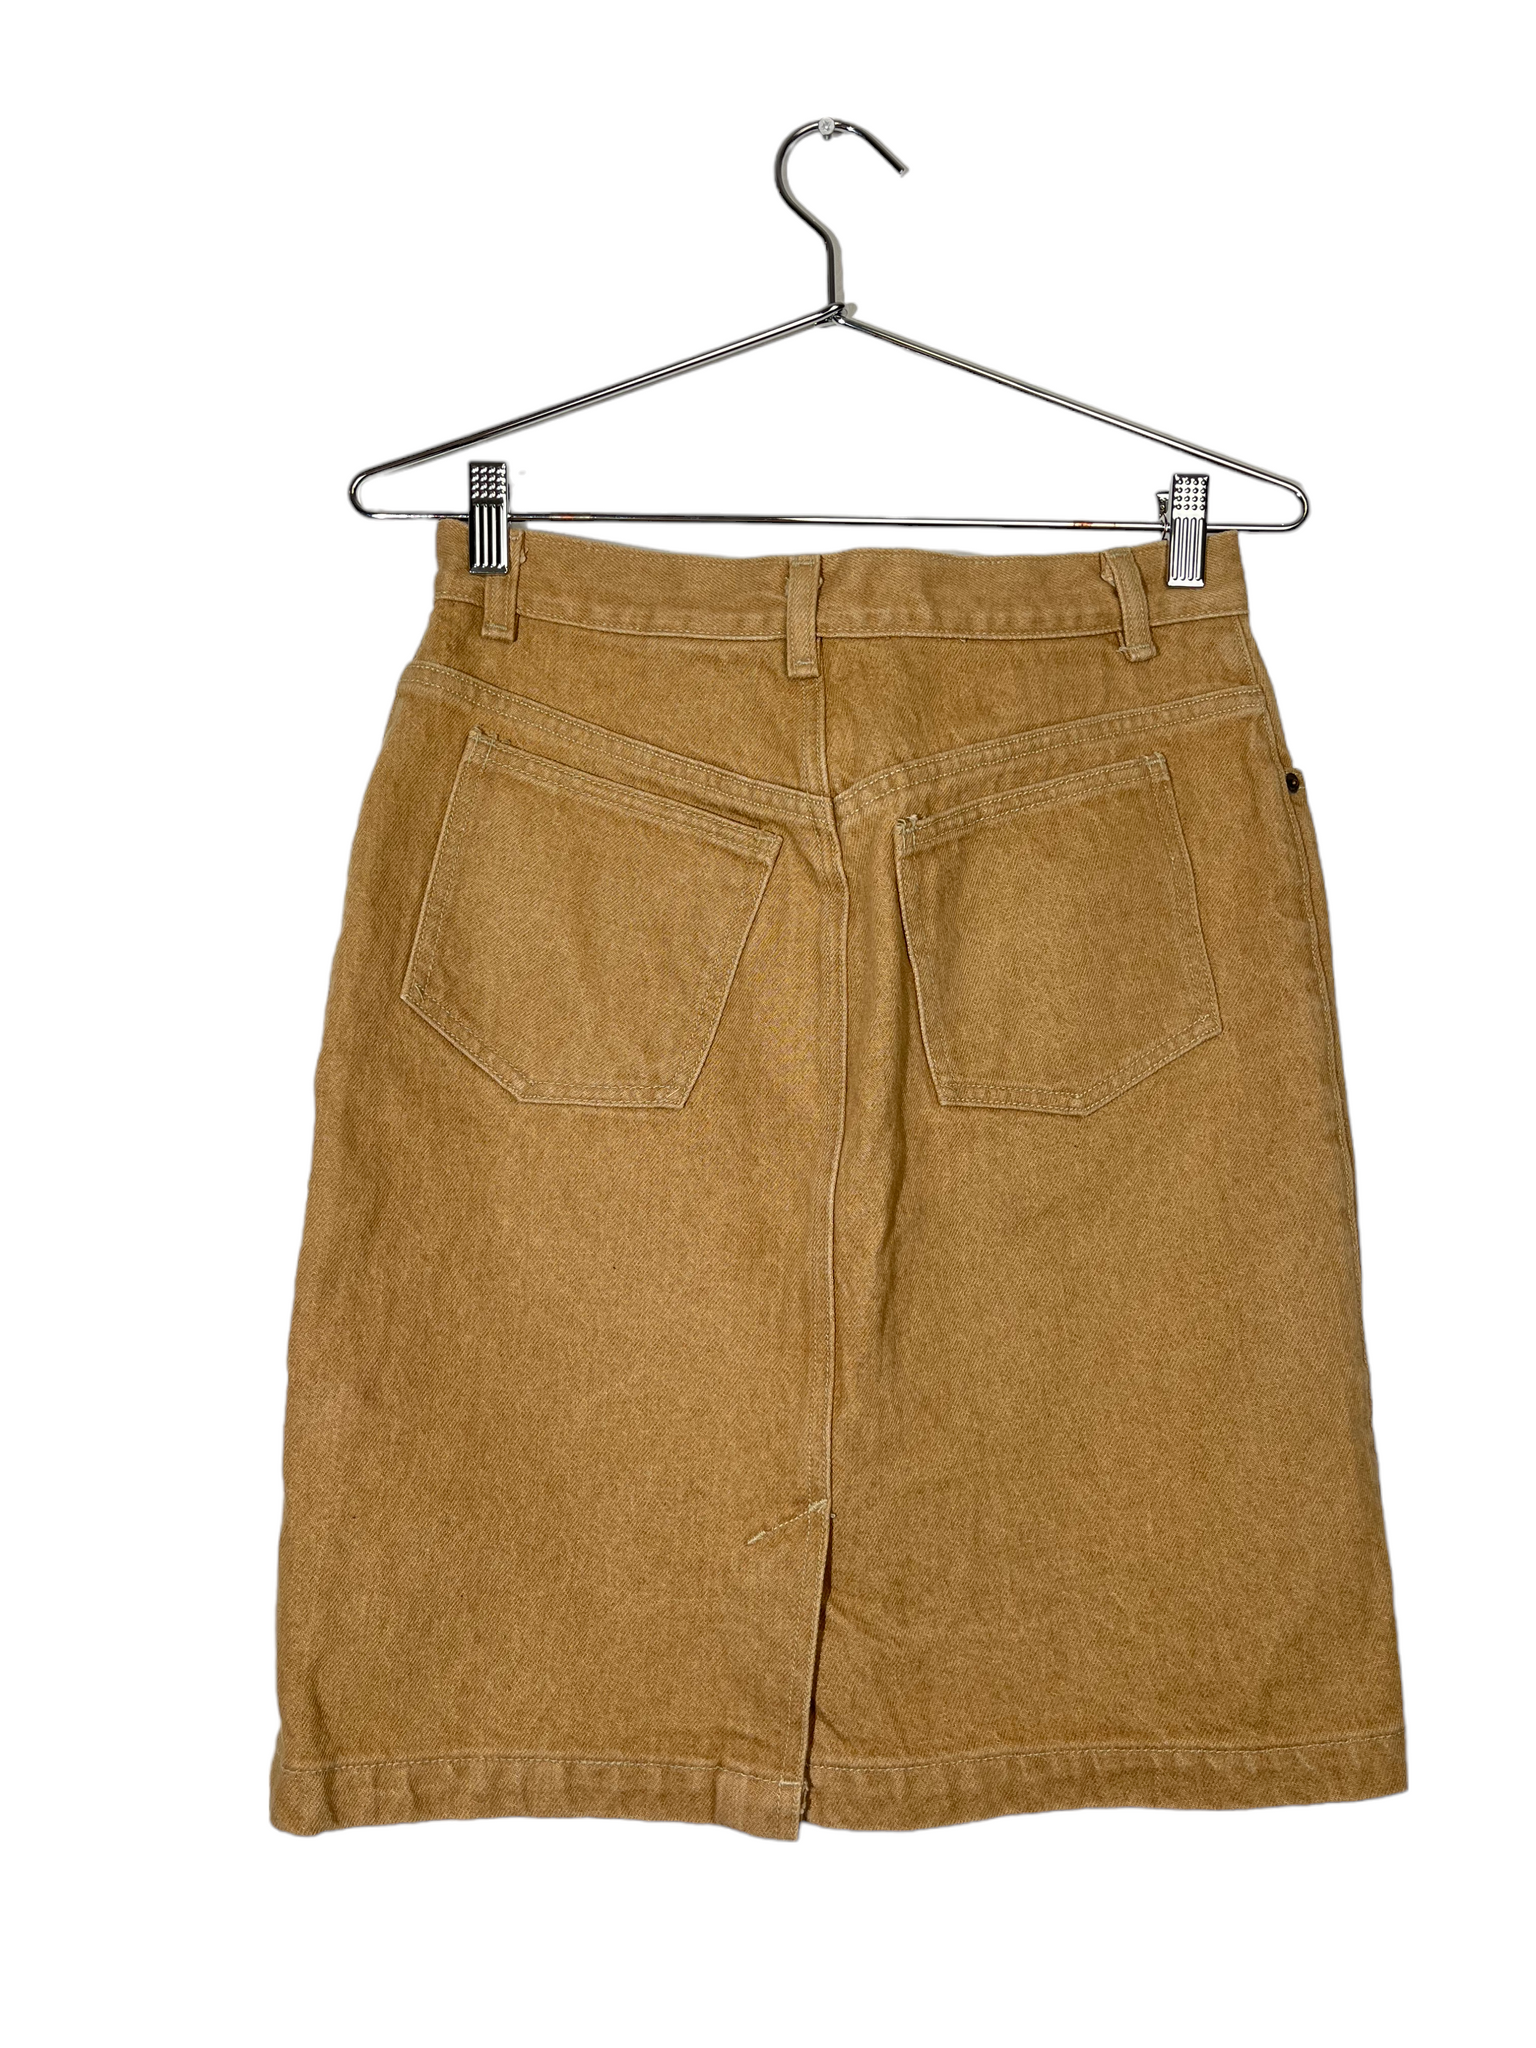 Vintage Calvin Klein Tan Denim Skirt